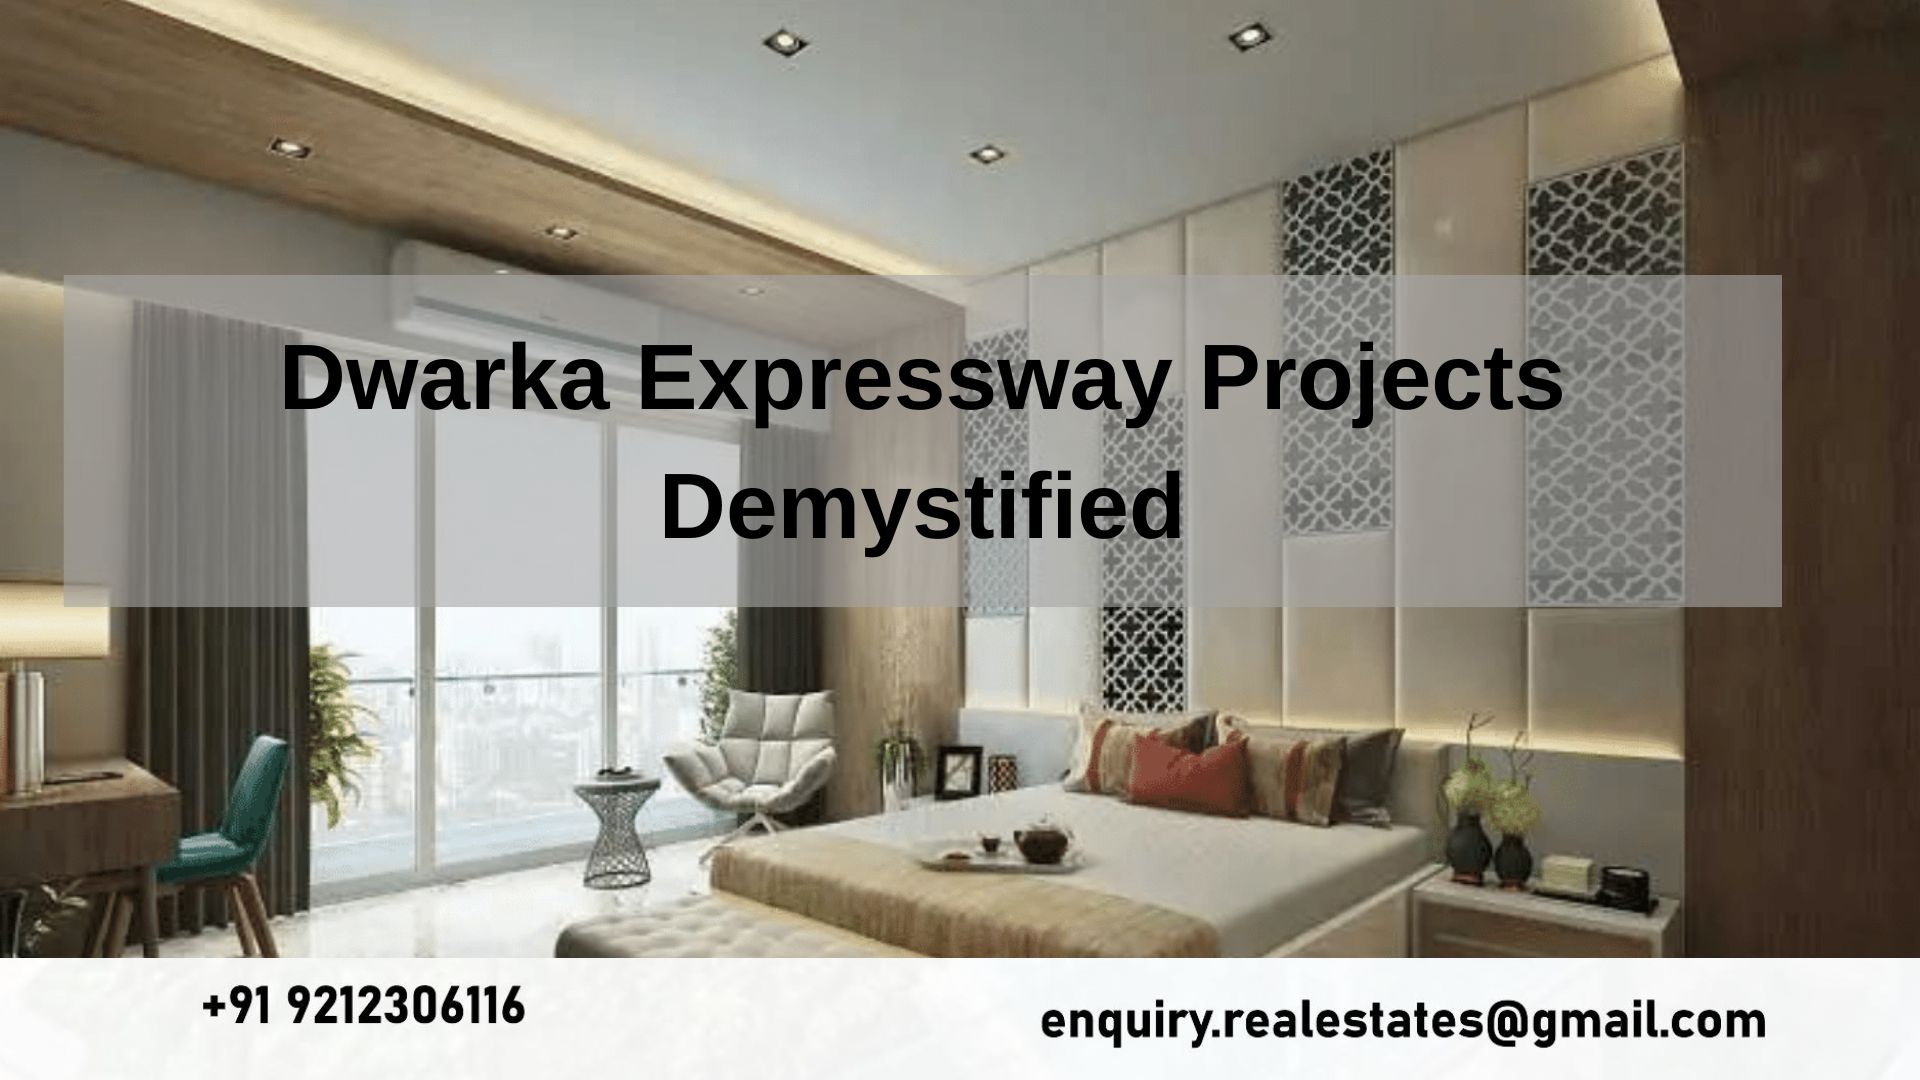 Dwarka Expressway Projects Demystified